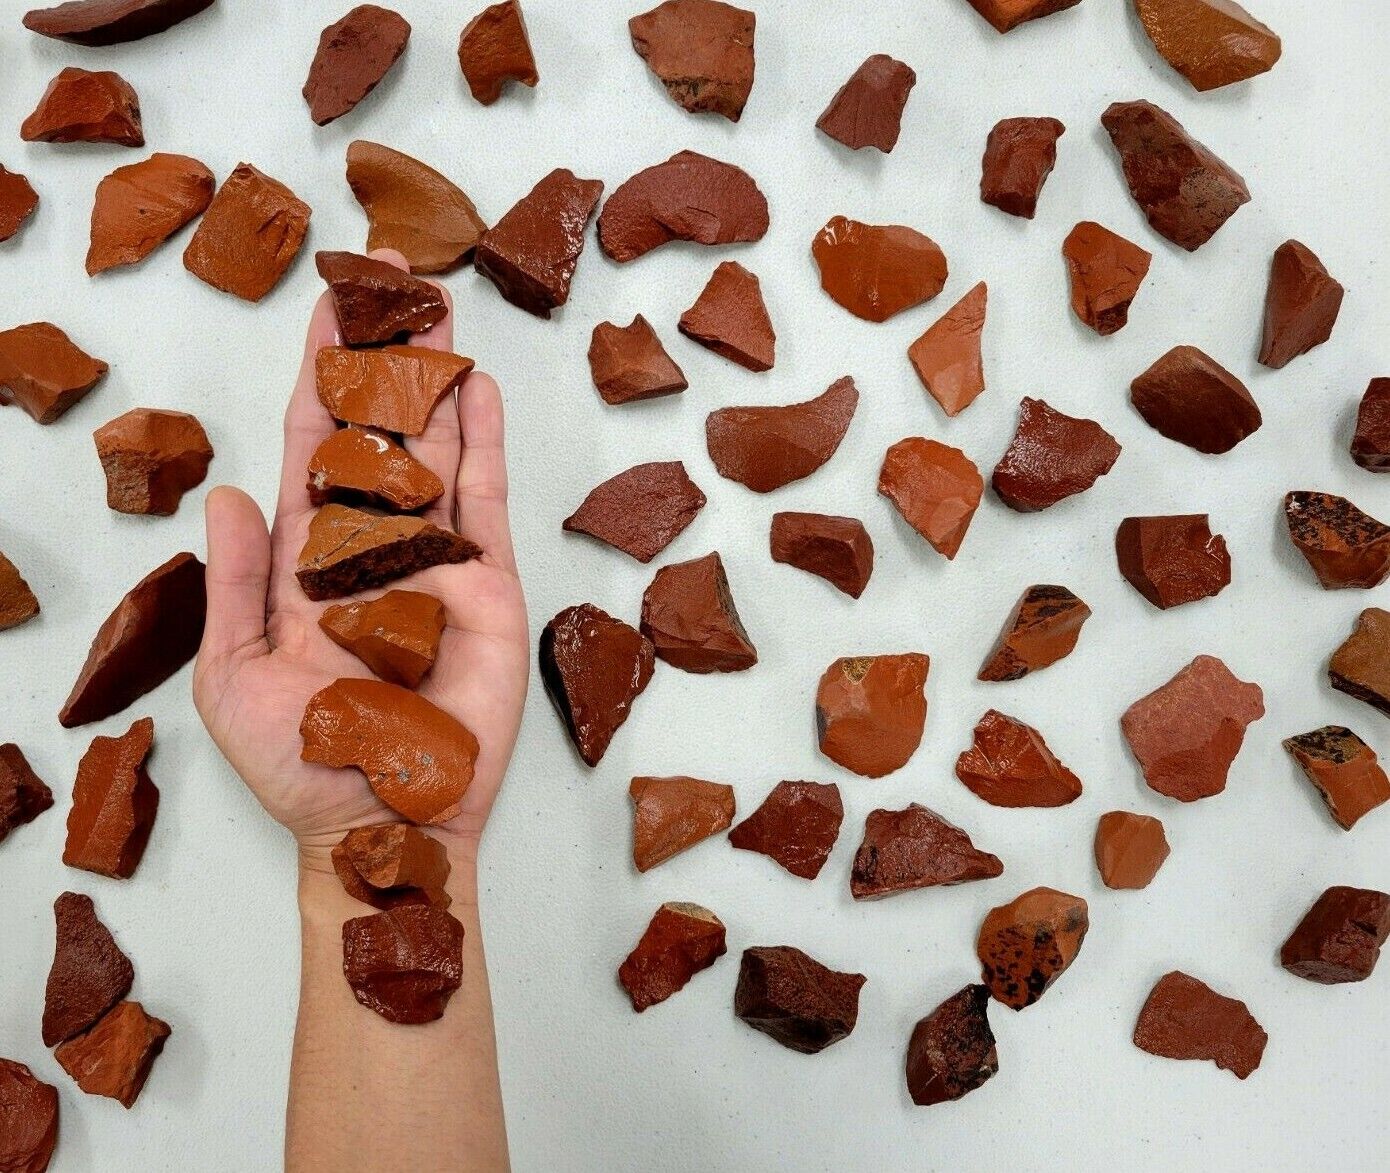 Red Jasper Rough Stones Bulk Natural Crystals Rocks for Tumbling & Healing